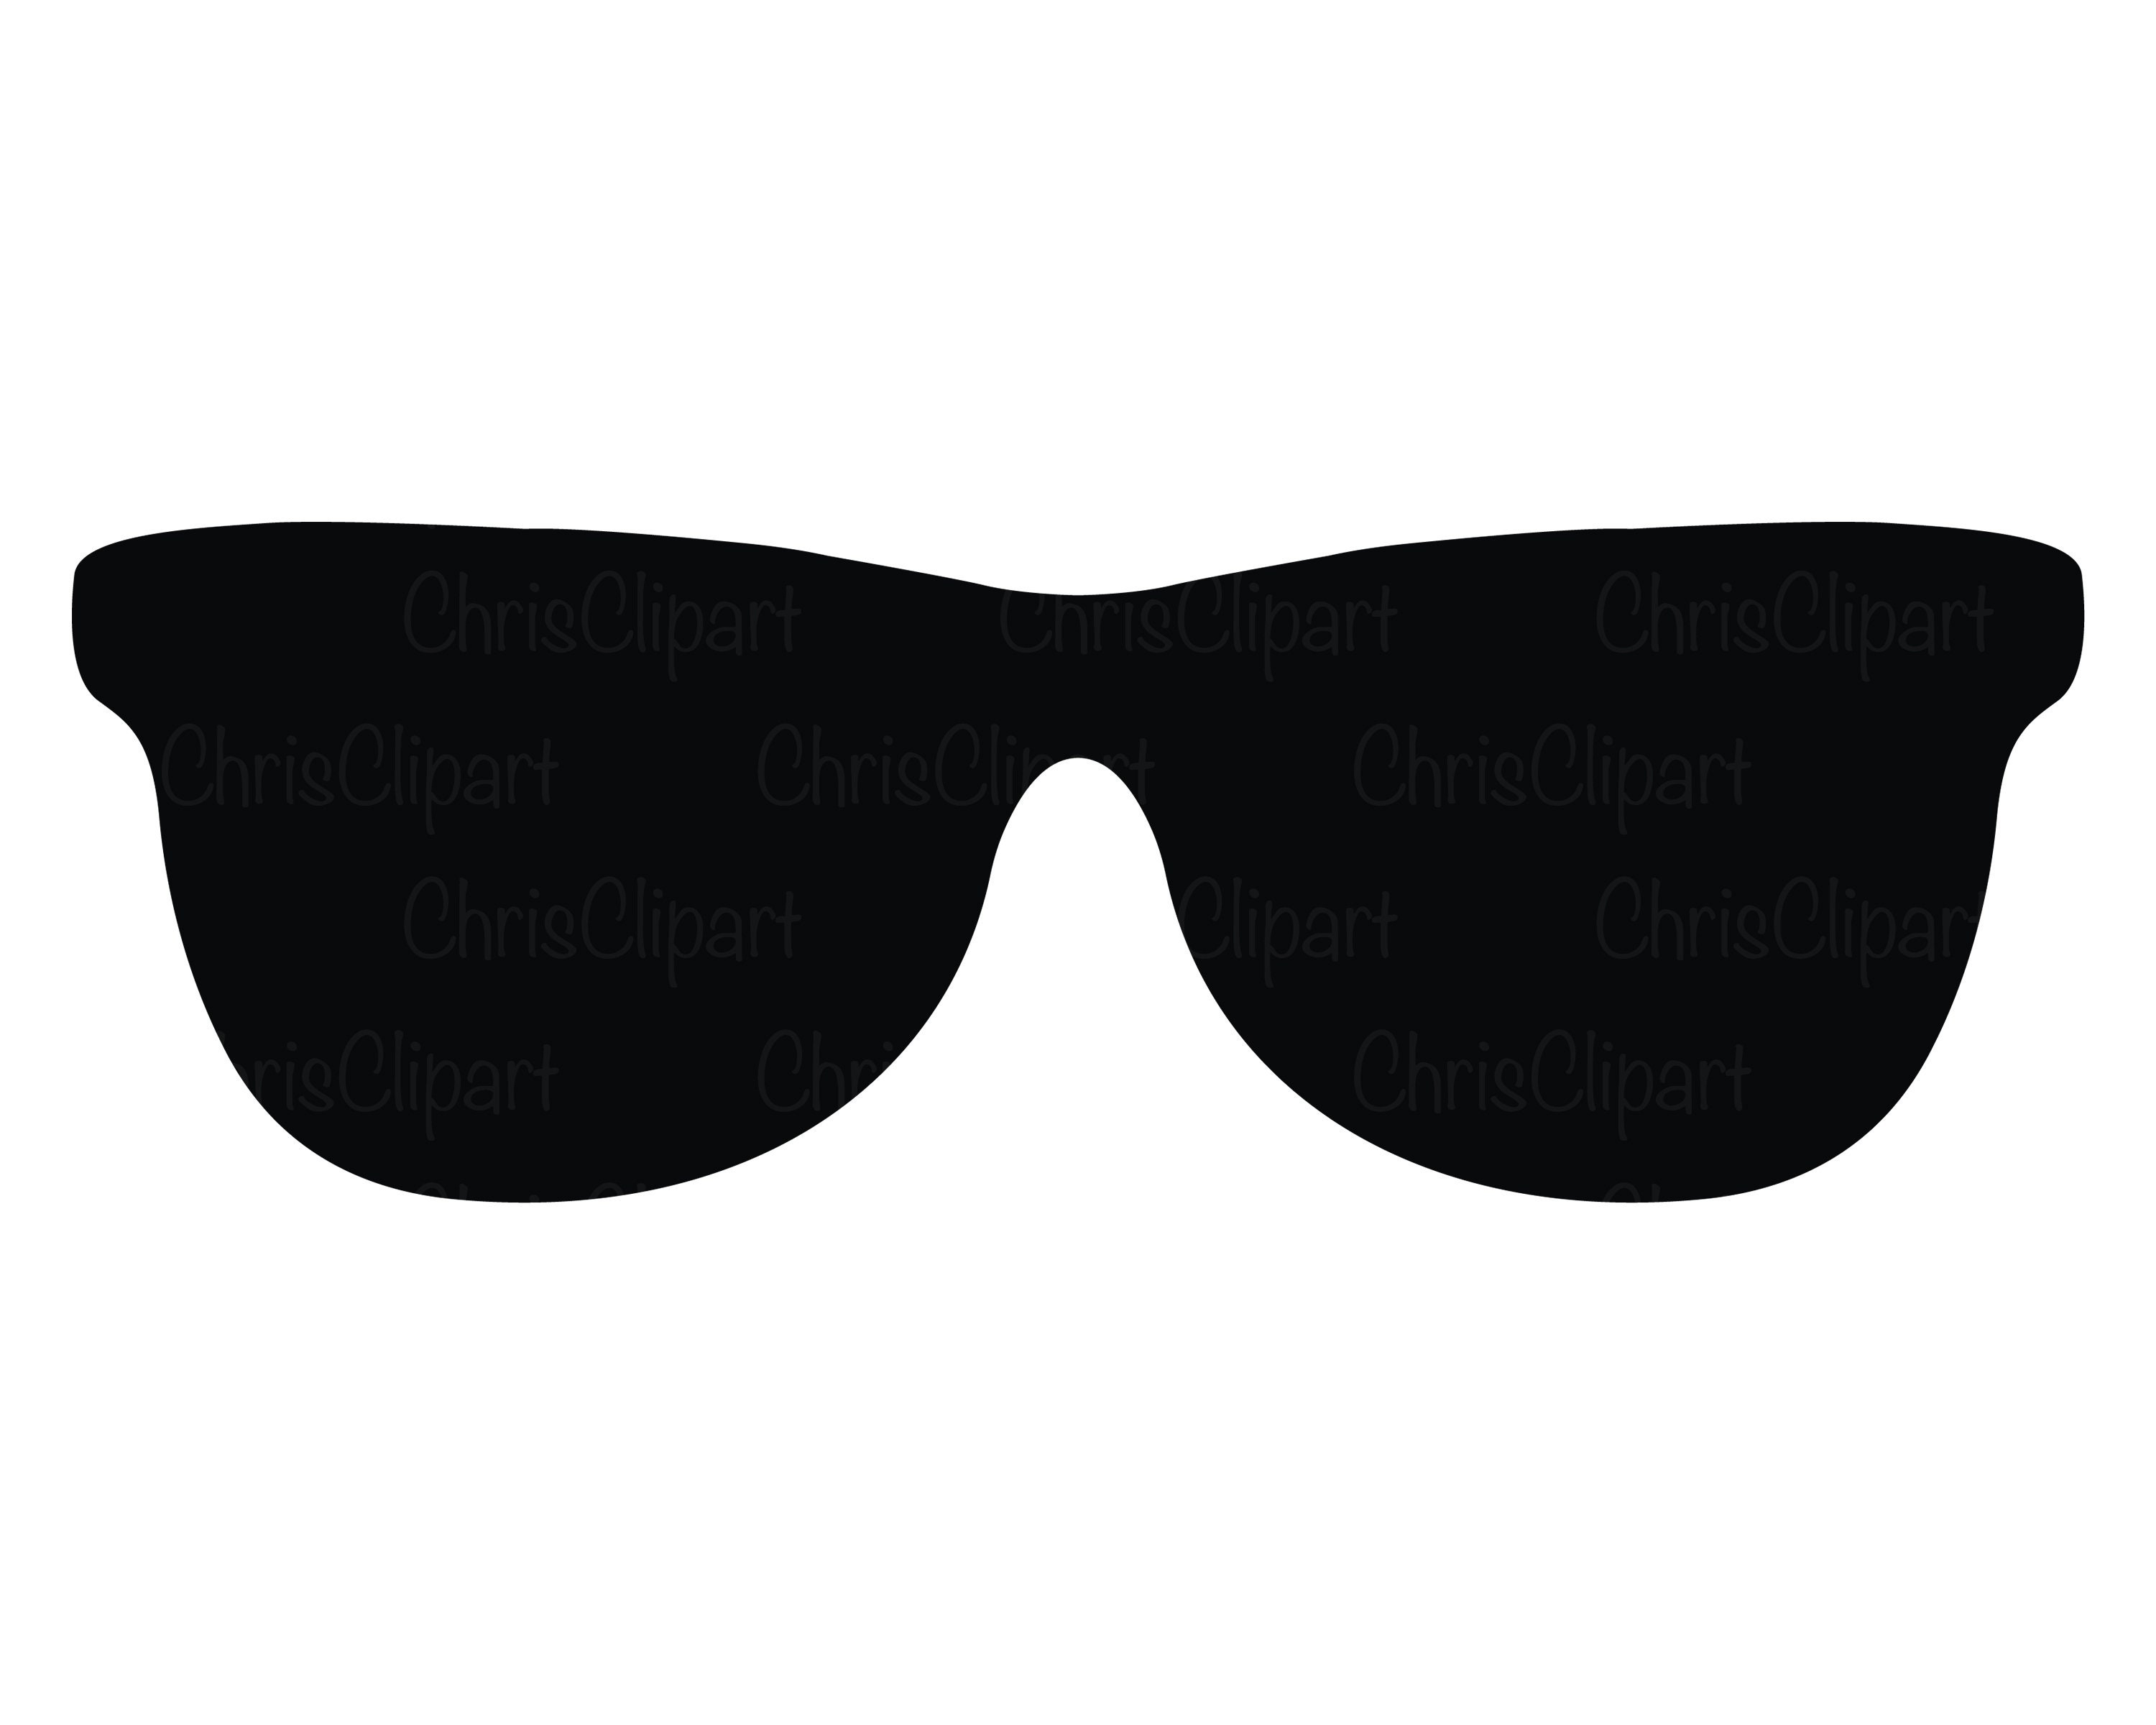 Sunglasses Svg Clipart Sunglasses Cricut Sunglasses Etsy Canada 